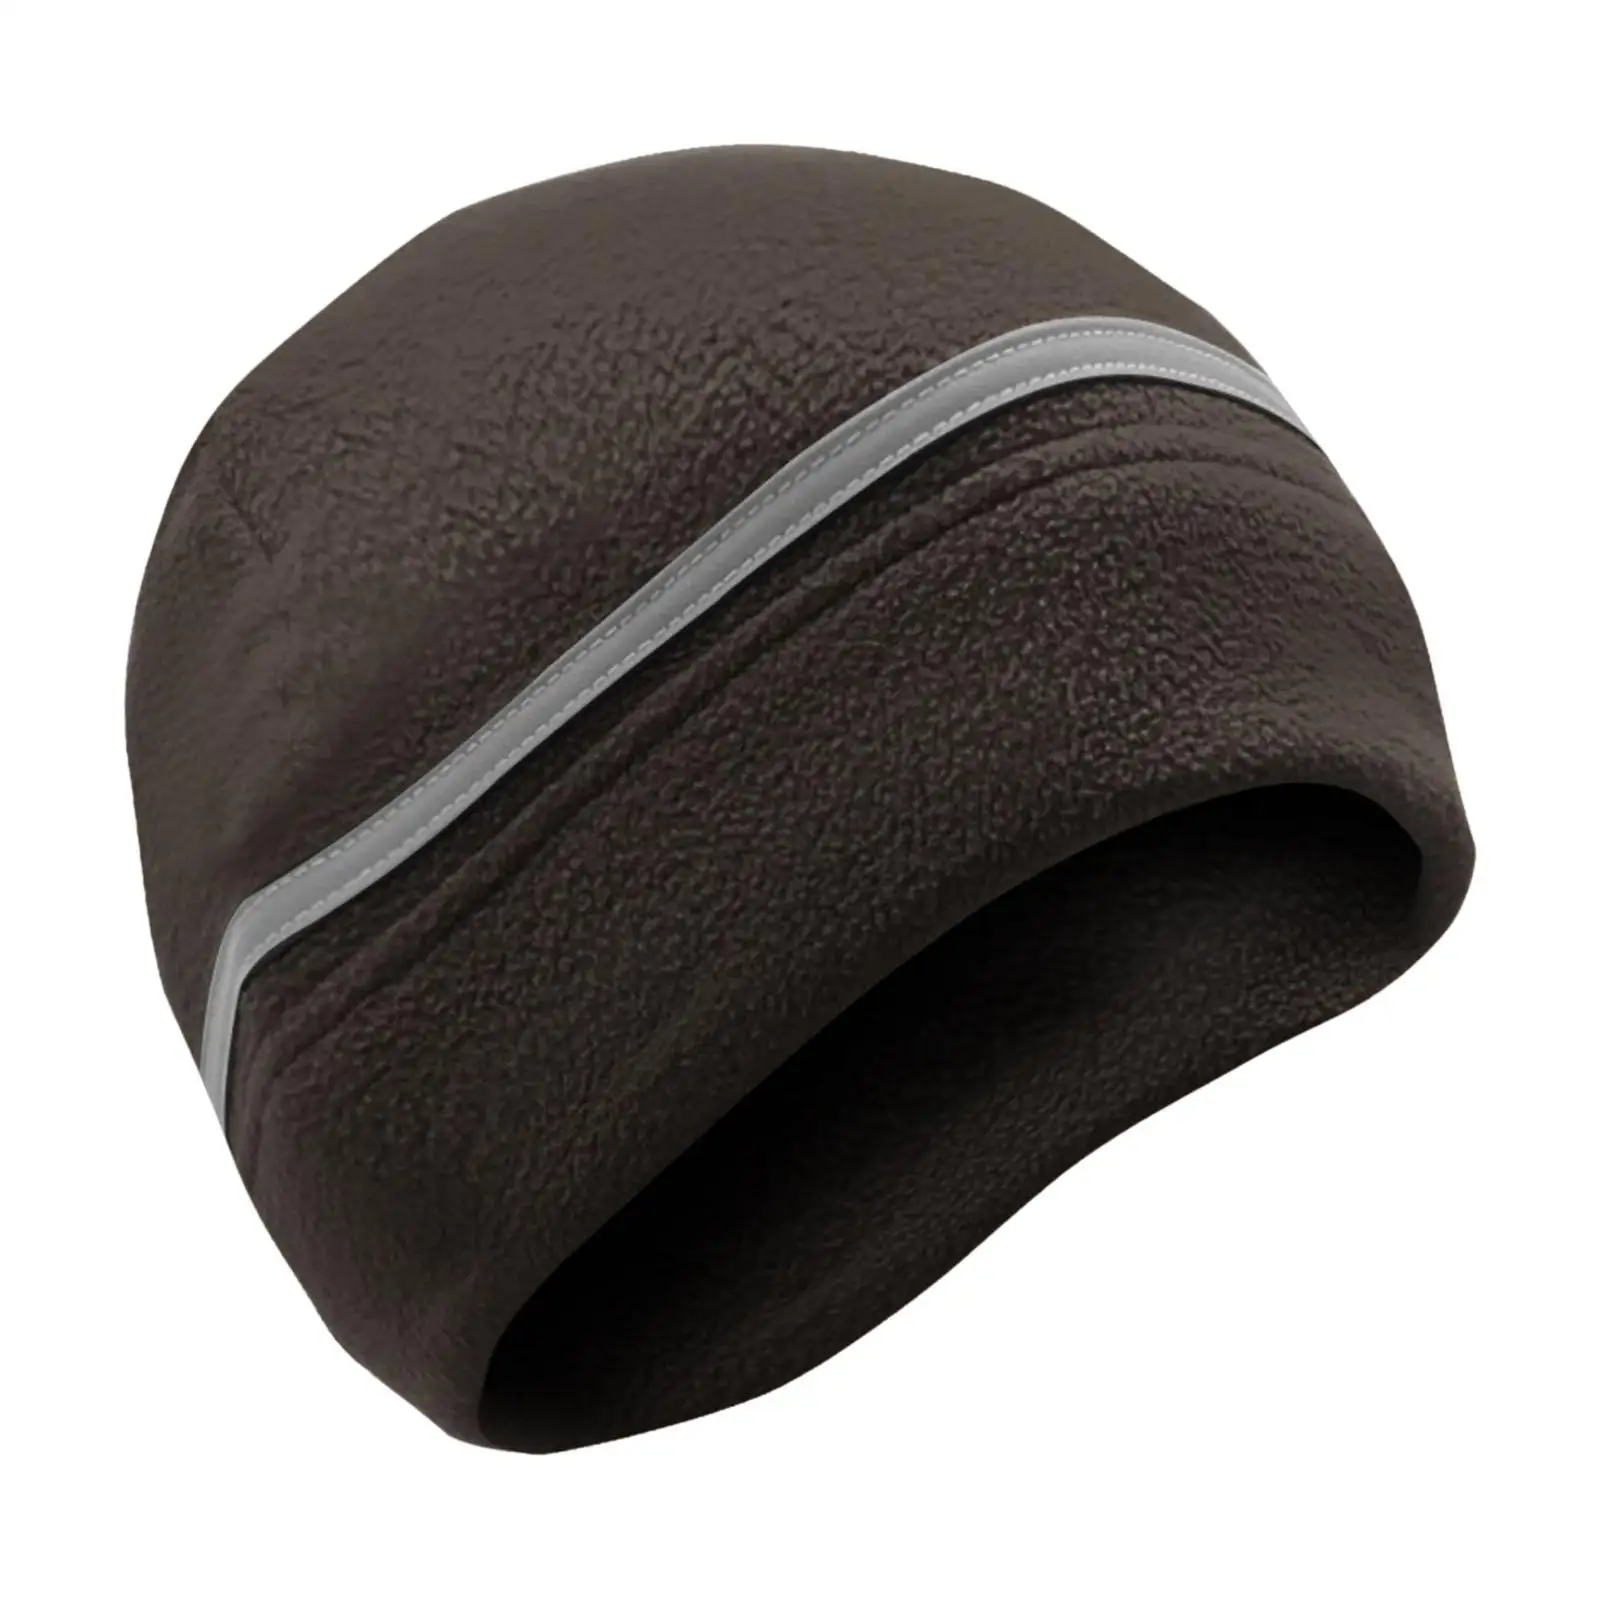 Winter Beanie Lightweight Fleece Thermal Comfortable Reflective Fleece Hat for Hiking Baseball Ski Motorcycling Outdoor Sports